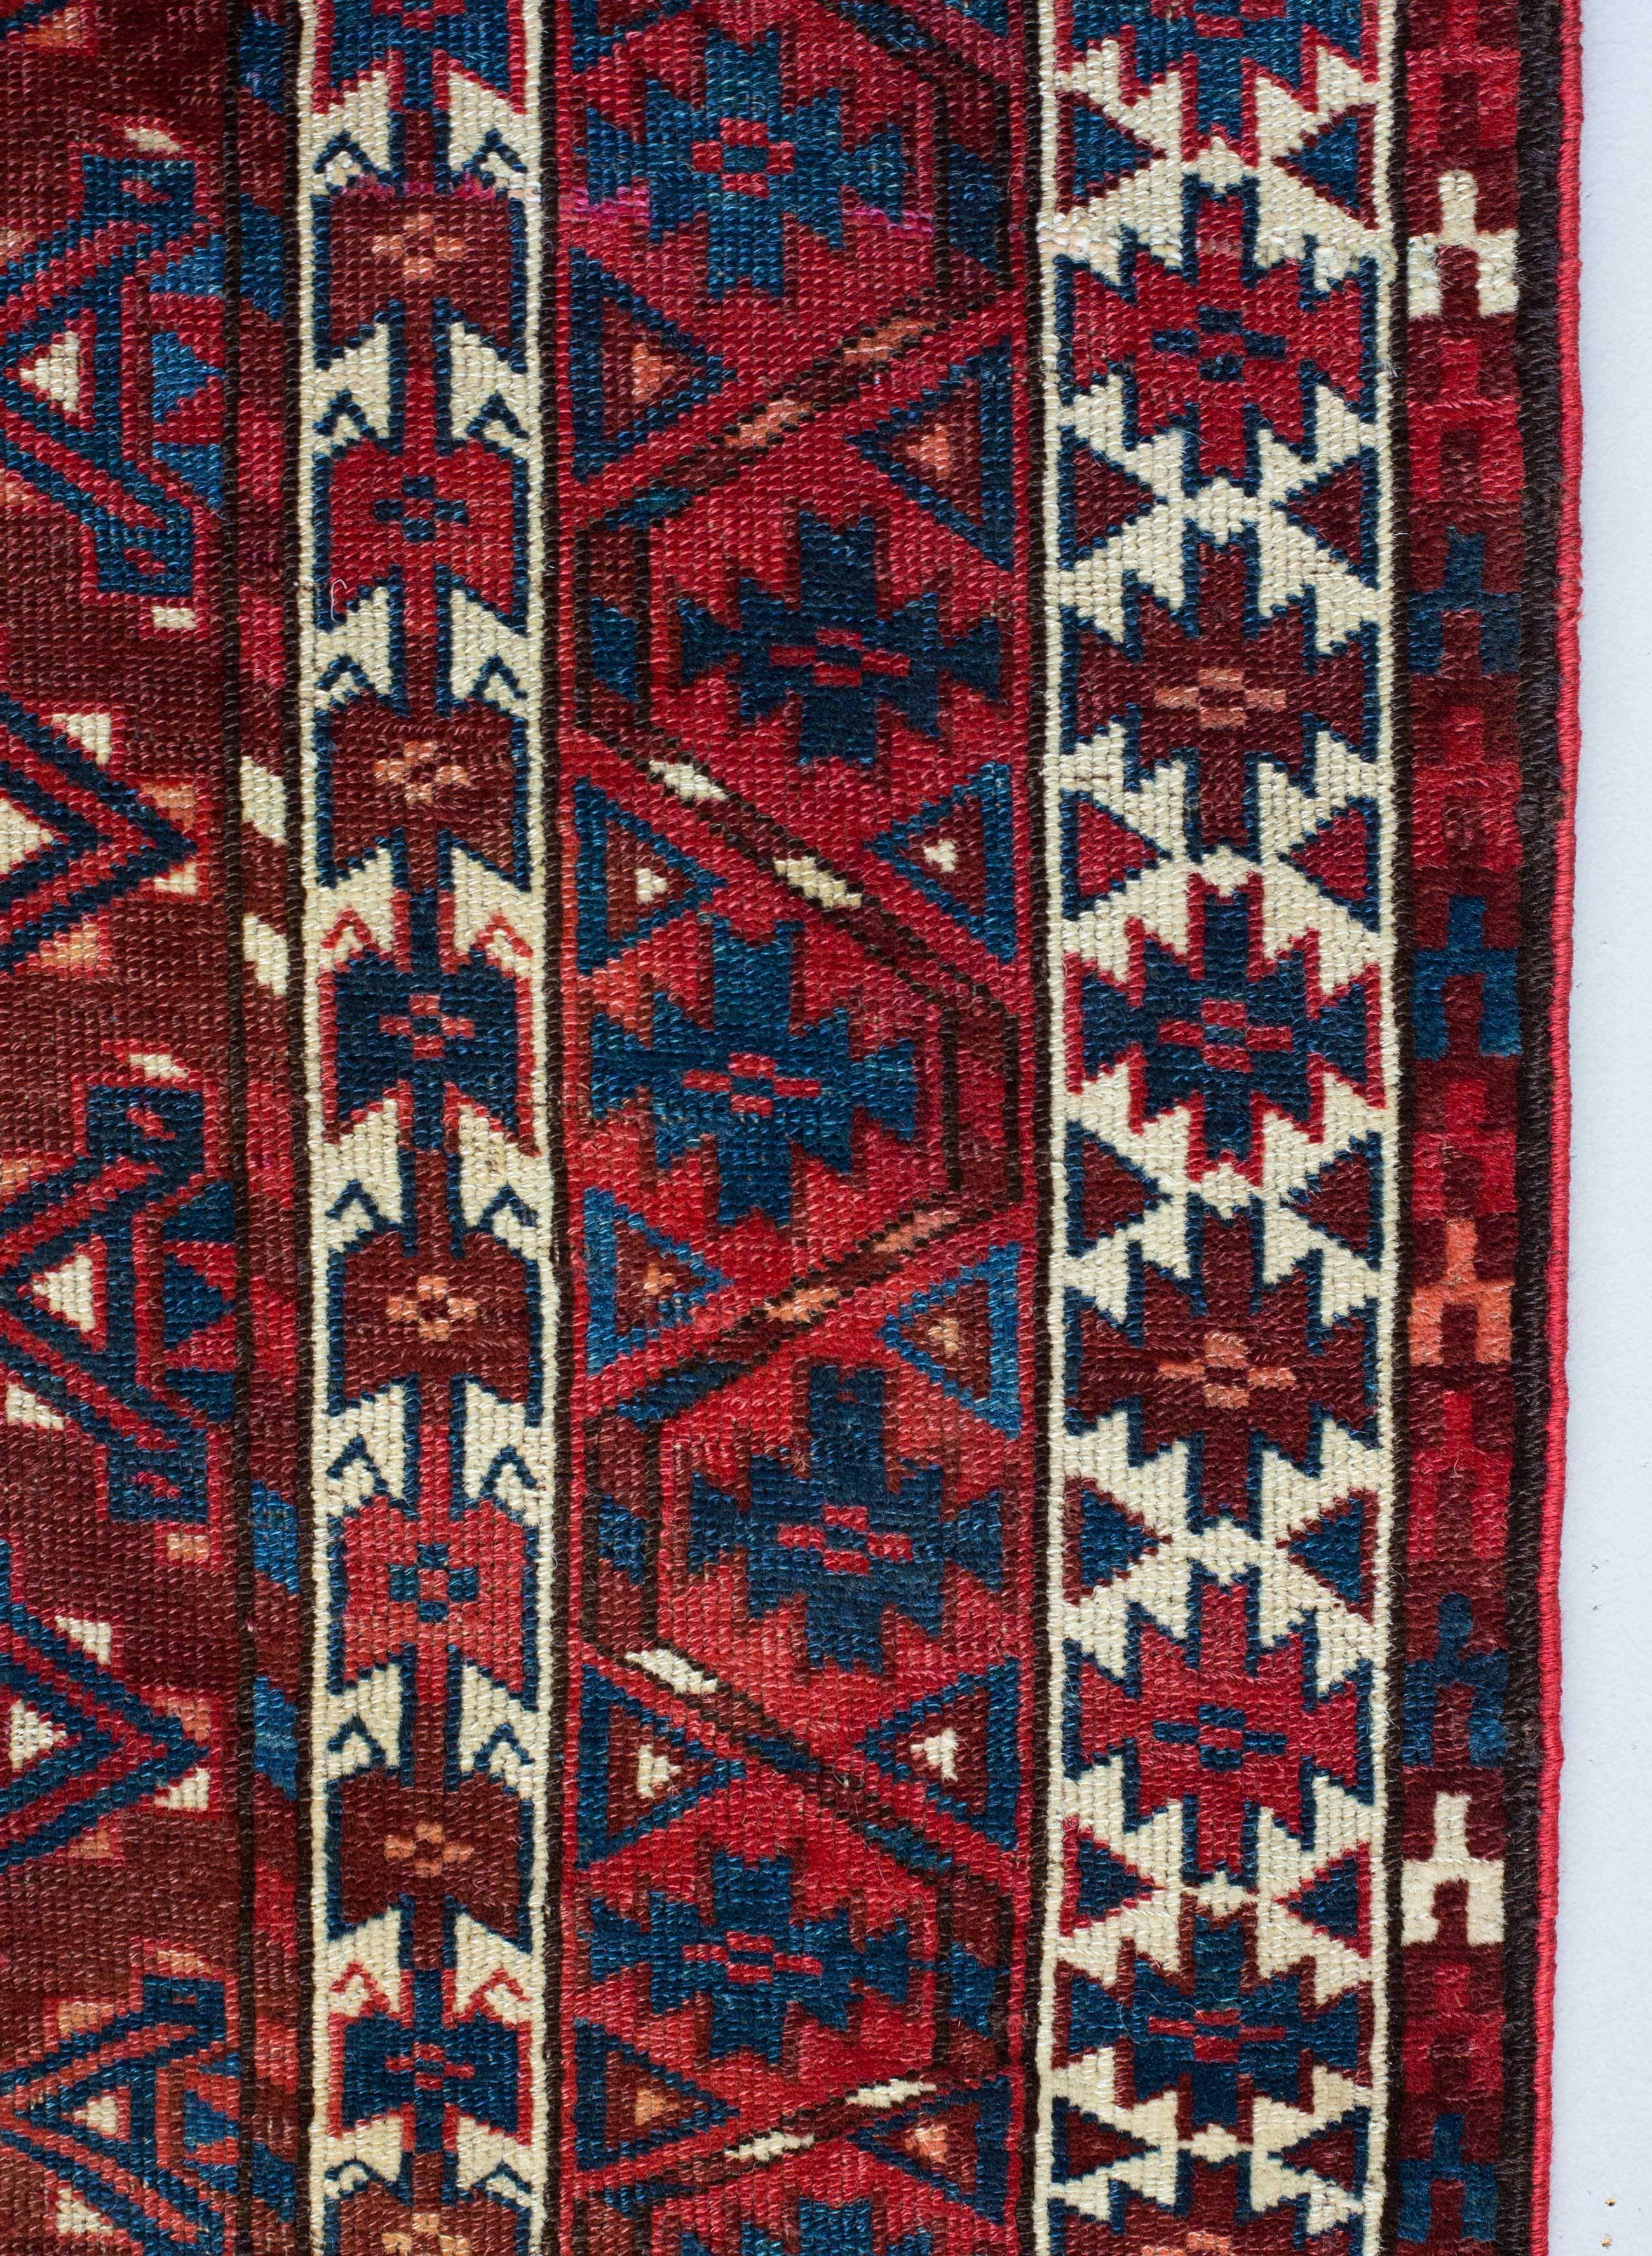 Tribal Mid-19th Century Turkmen Yomud Tribe Ensi